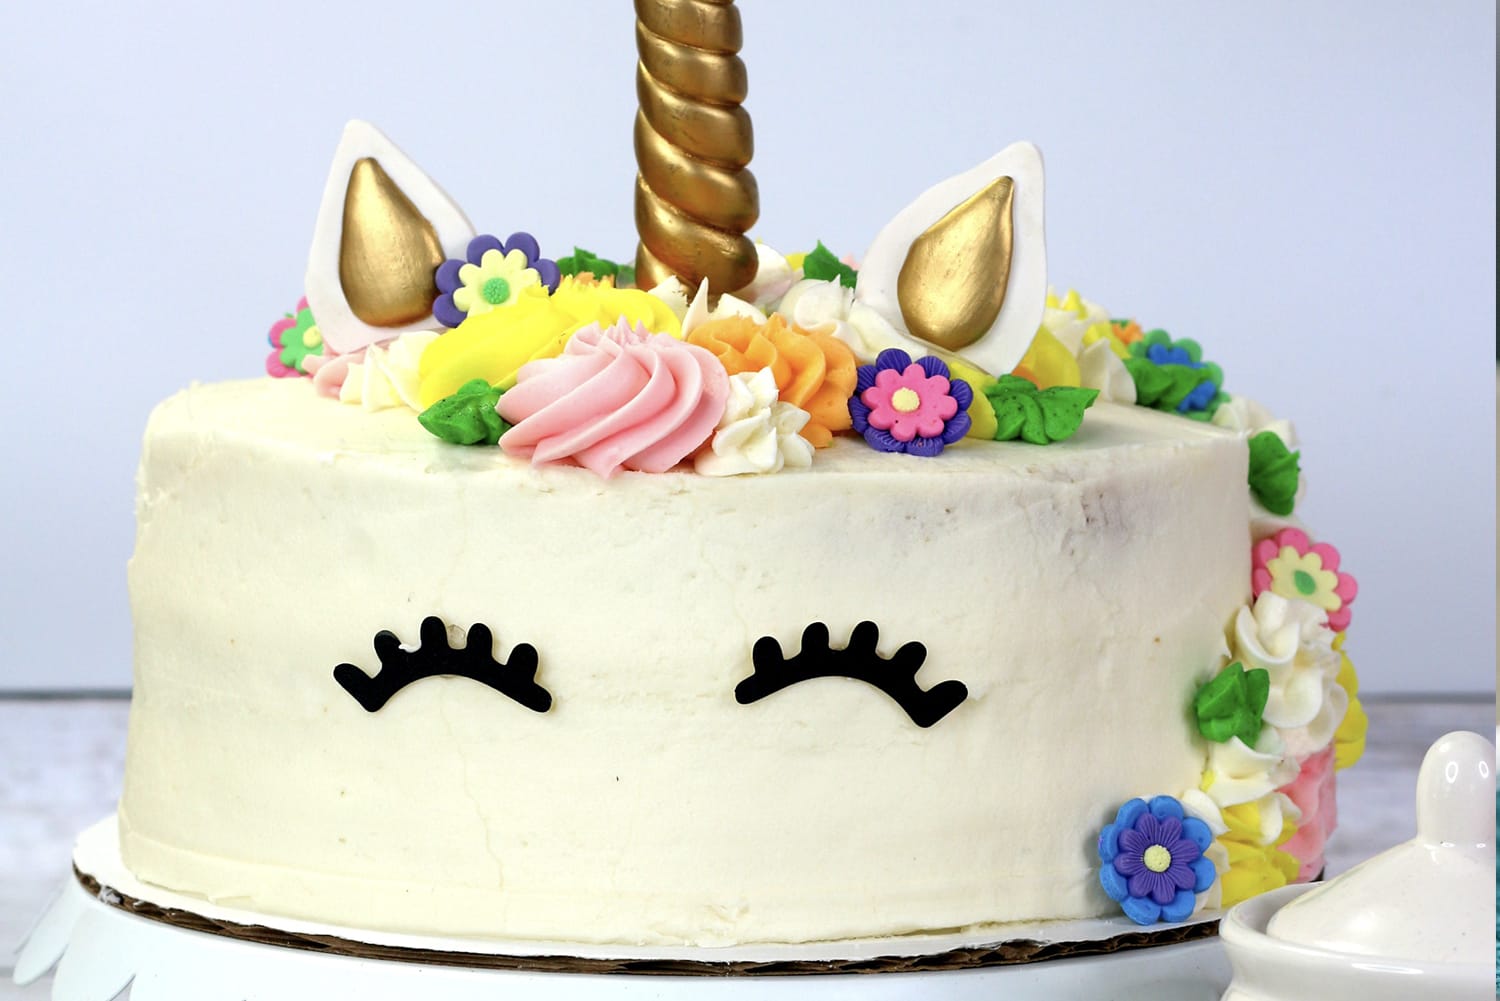 Creating Magic at Home: DIY Unicorn Theme Birthday Cake Recipe